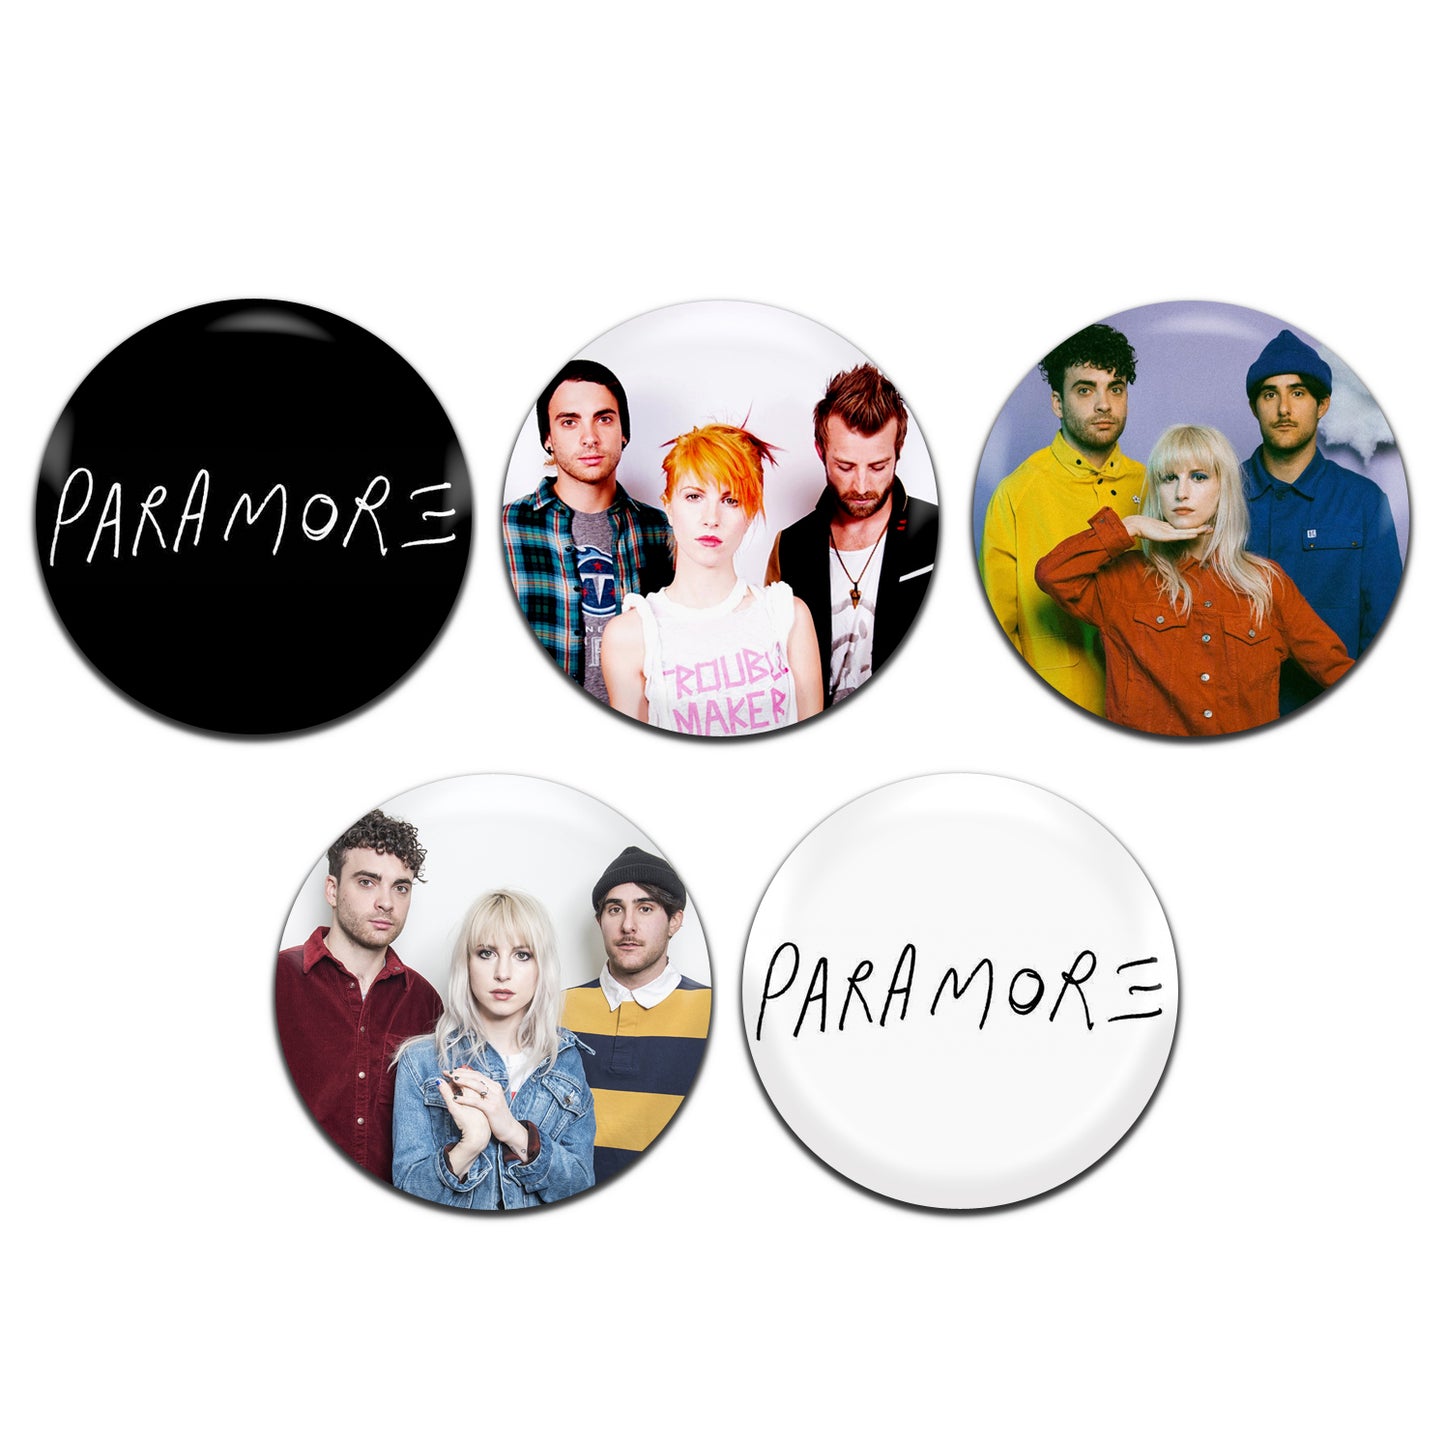 Paramore Pop Rock Alternative Emo 00's 25mm / 1 Inch D-Pin Button Badges (5x Set)